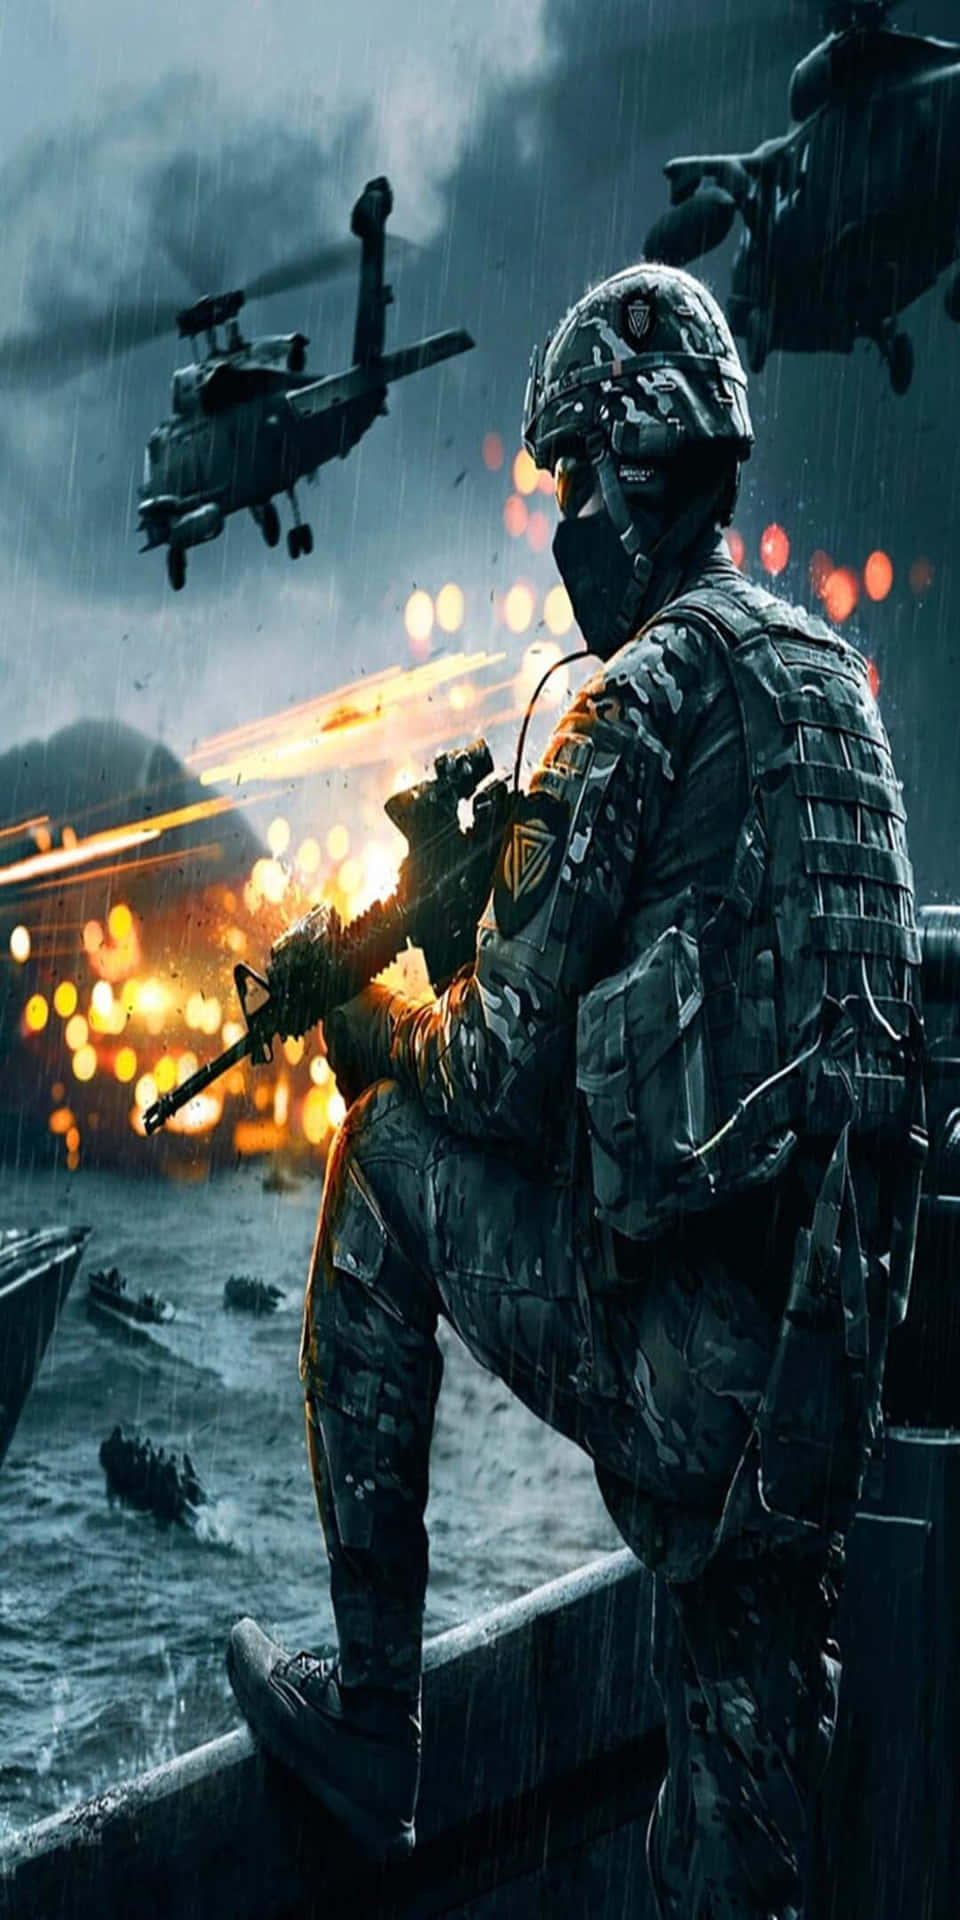 Pixel3 Bakgrundsbild Battlefield 4 Soldat.